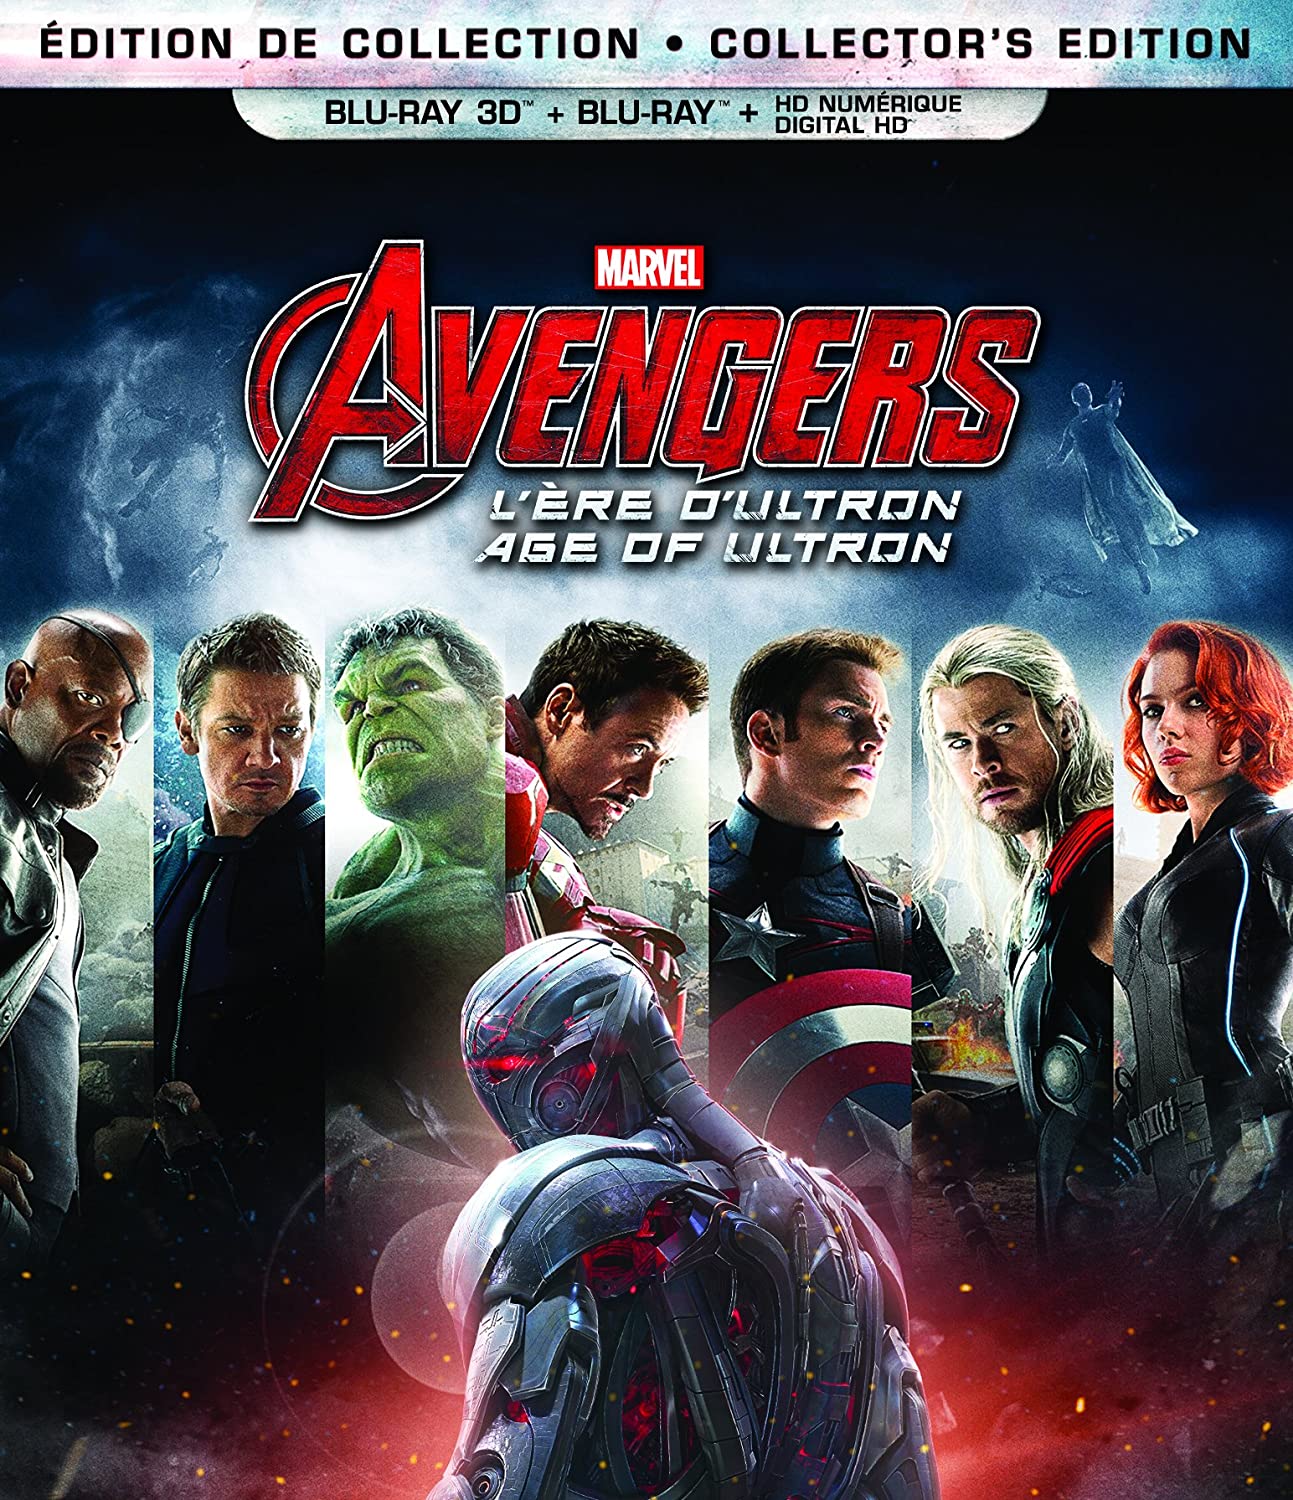 Avengers : L'ère d'Ultron [3D Blu-ray + Blu-ray + HD numérique] (Bilingual) [Blu-ray]